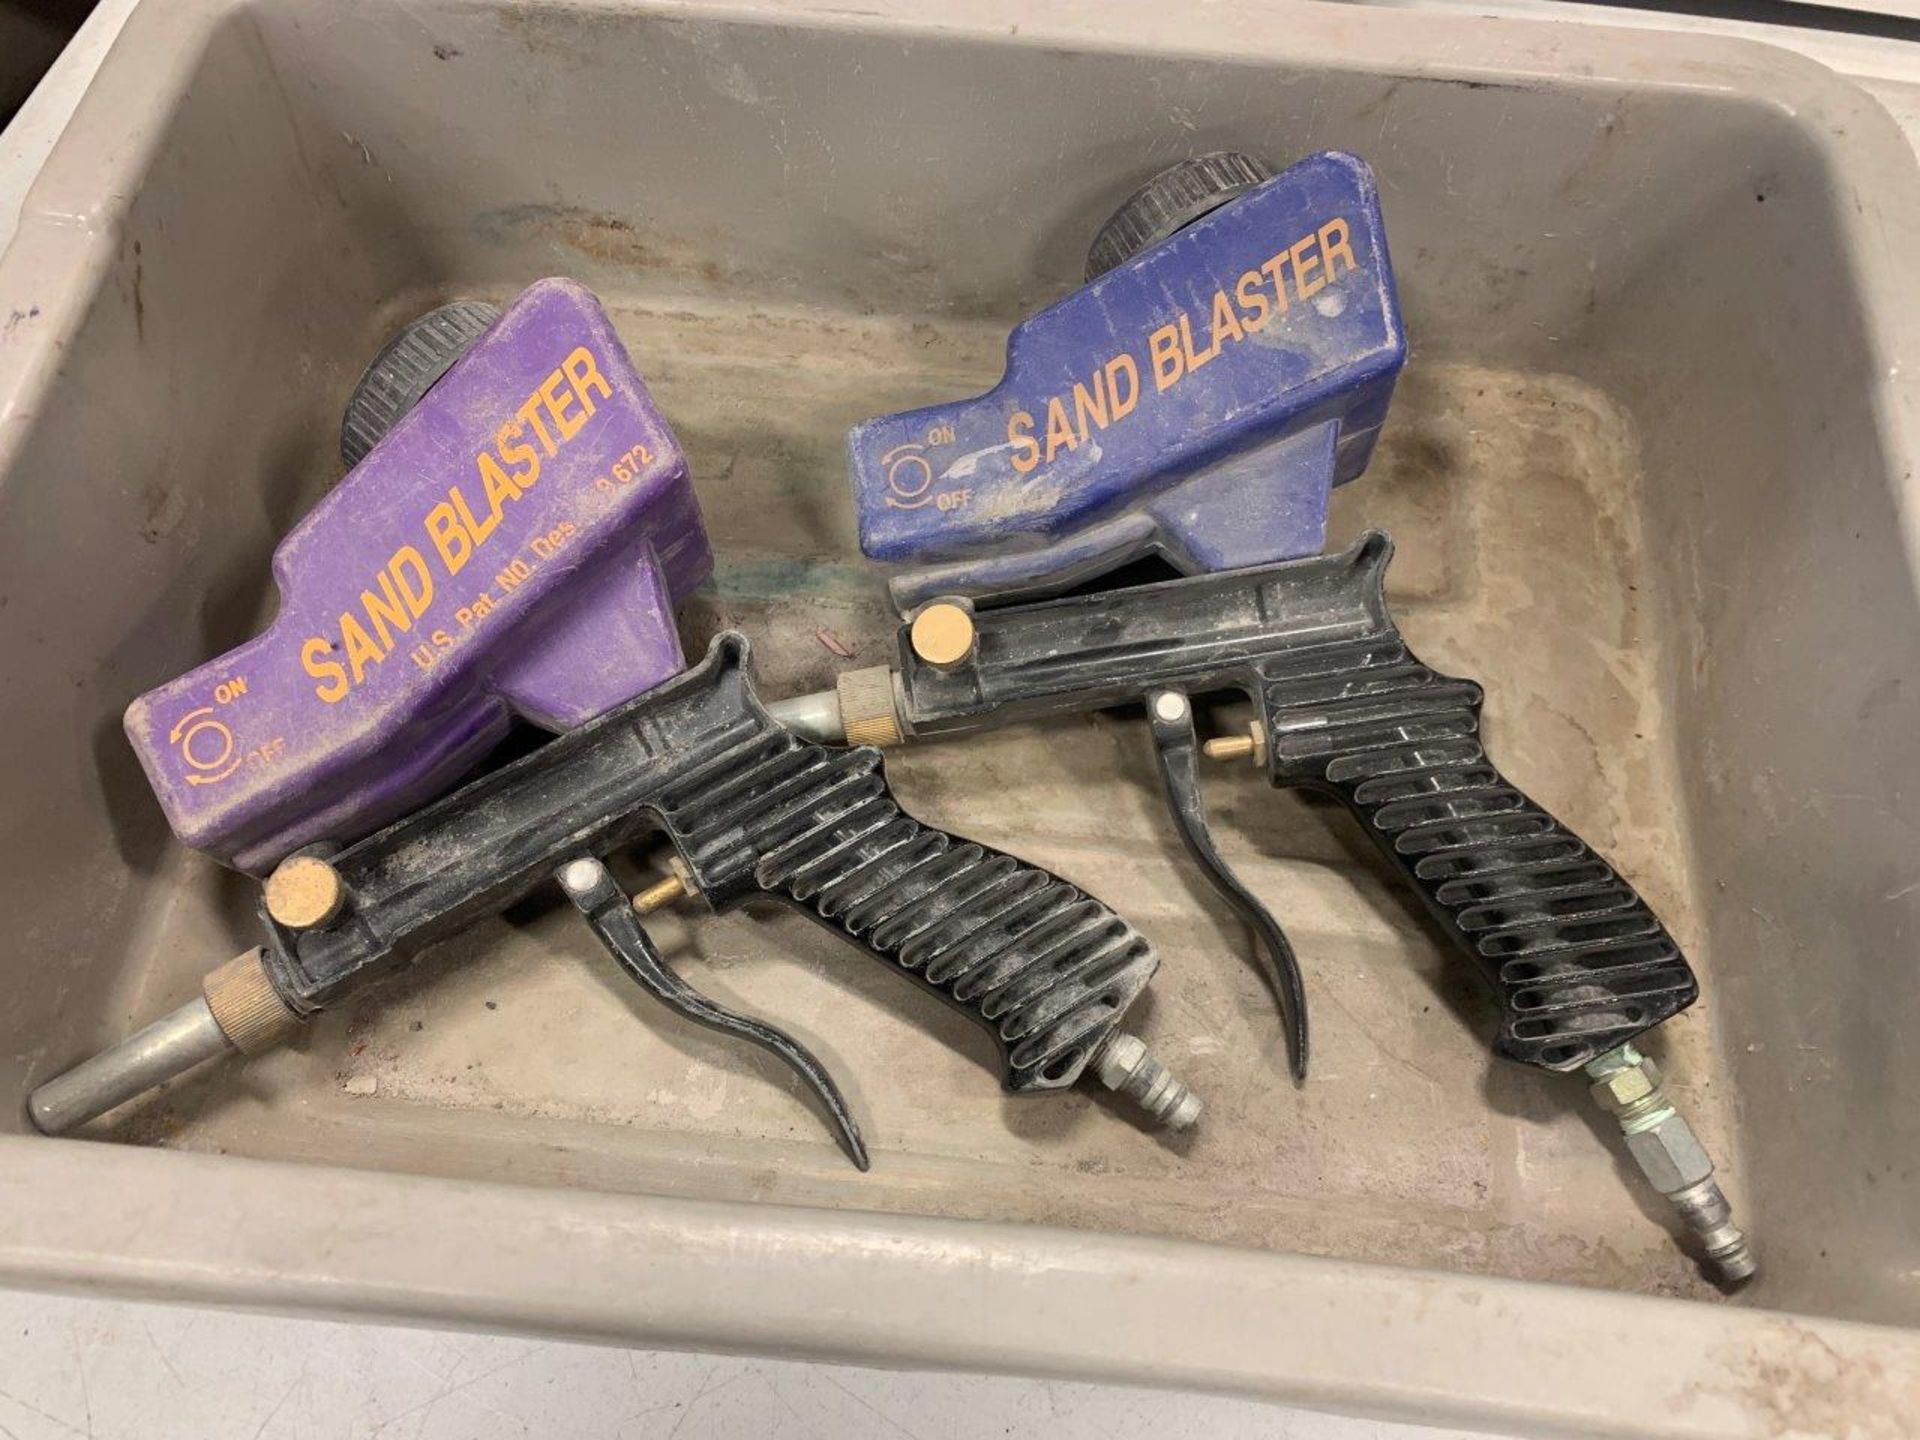 2-PORTABLE PNEUMATIC SANDBLASTER GUNS